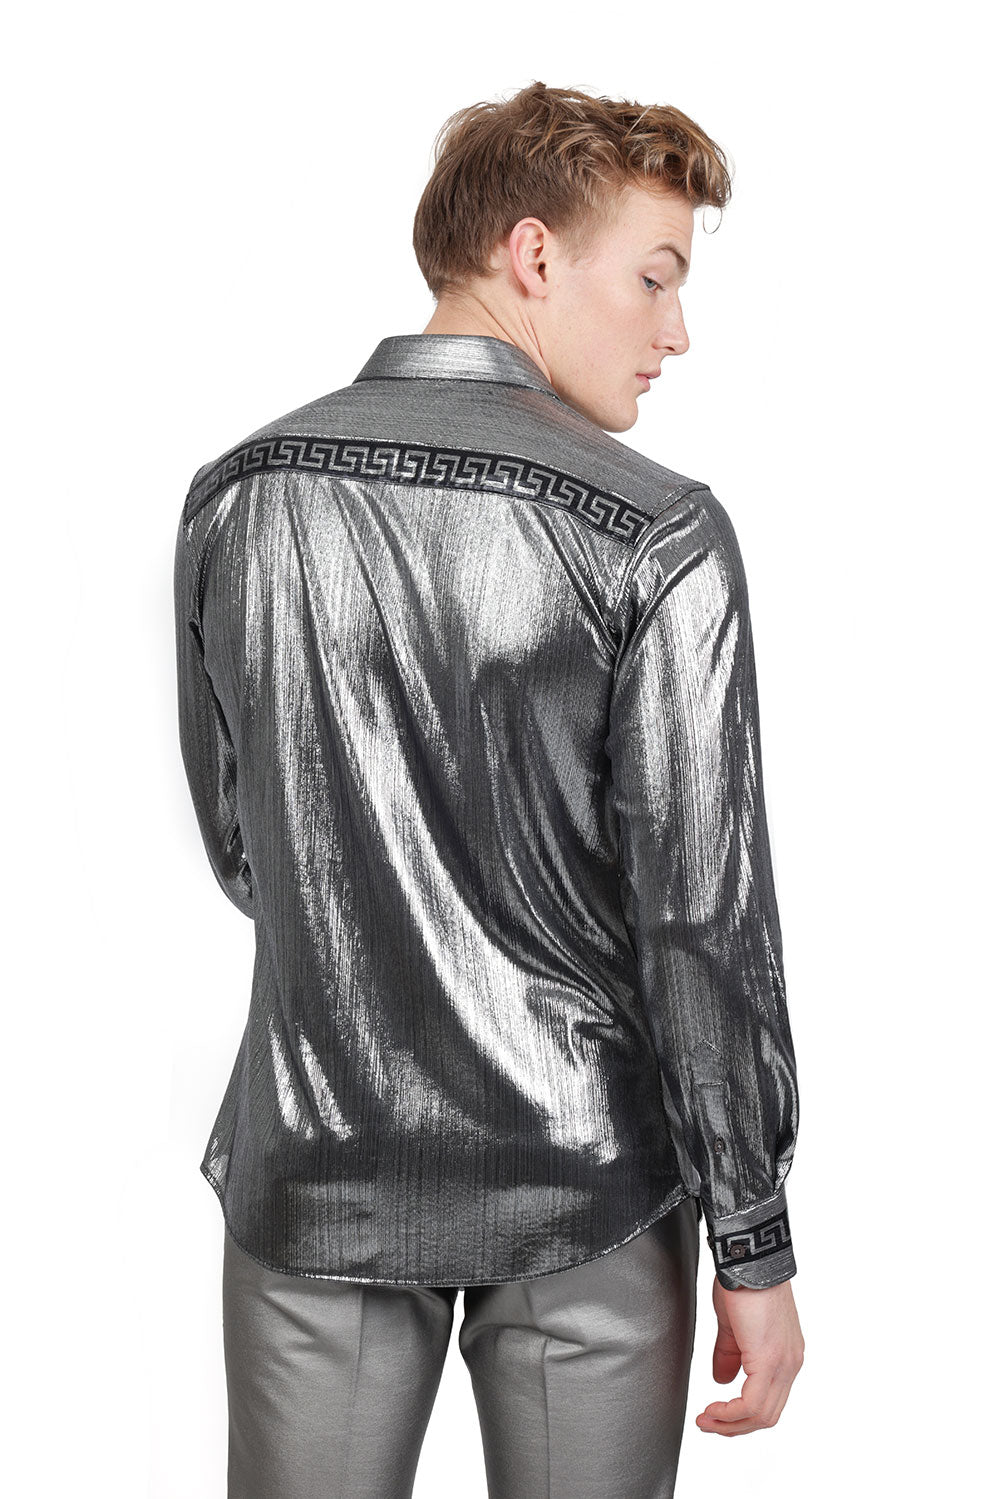 BARABAS Men's Greek Key Print Long Sleeve Button Up Shiny shirts B314 Silver Black 